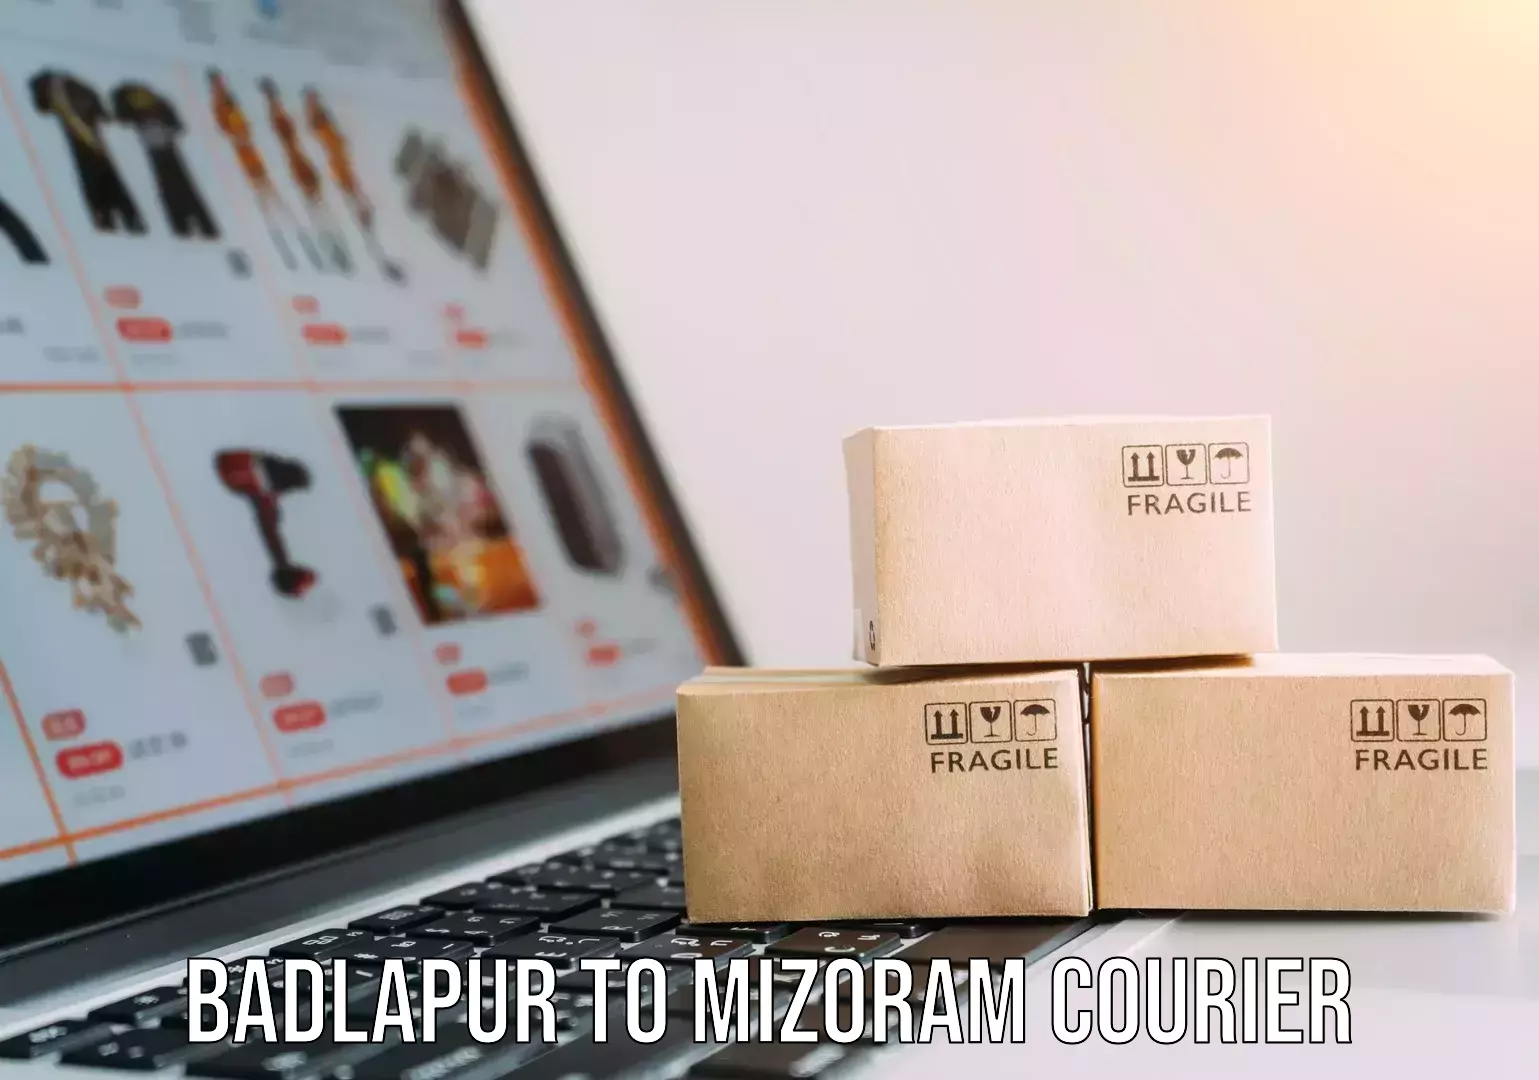 Next-day delivery options Badlapur to Mizoram